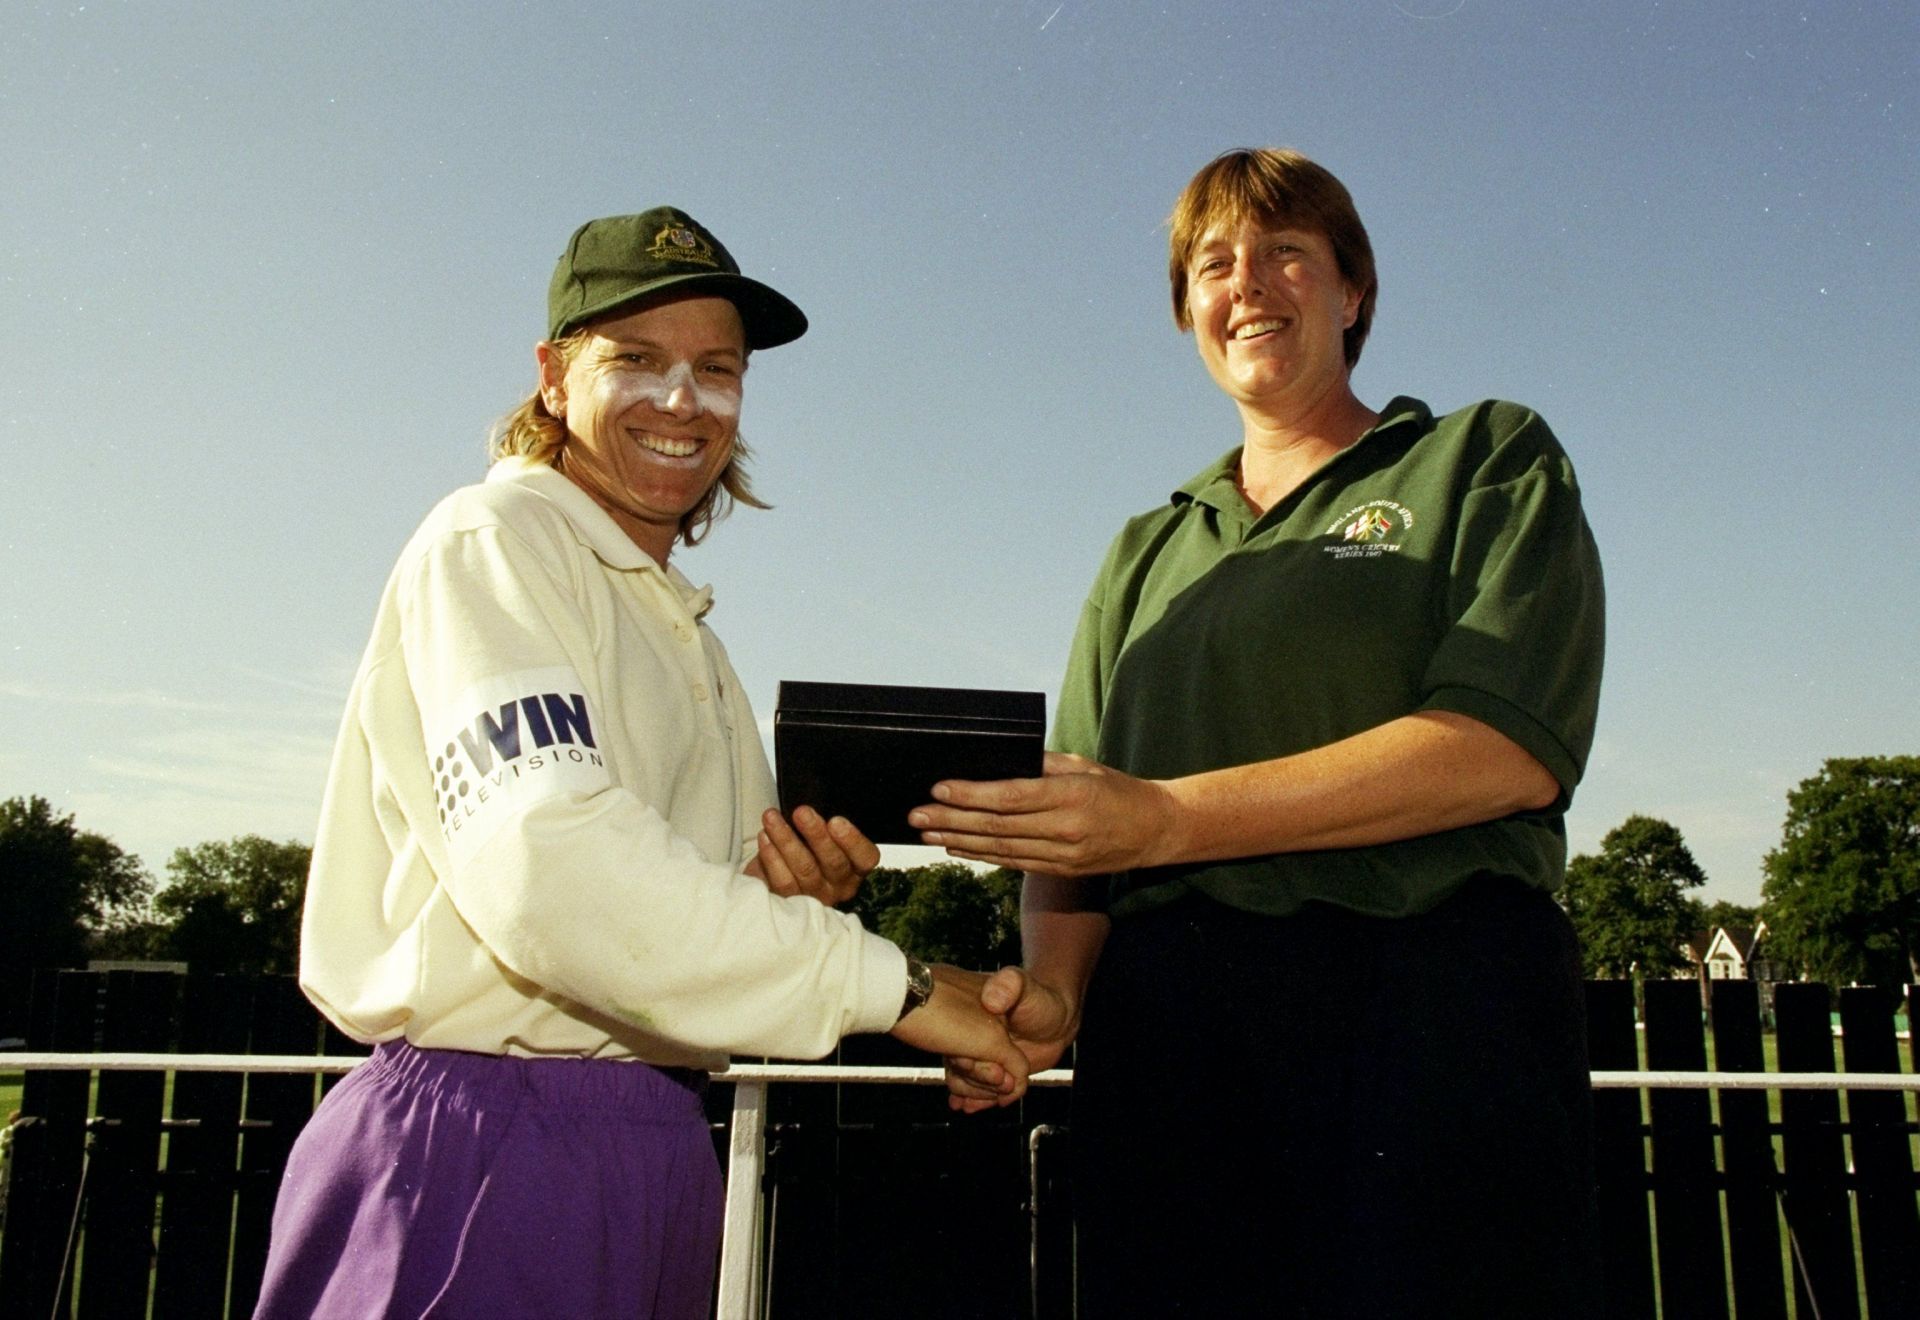 Joanne Broadbent scored a brilliant double century against England Women in 1998